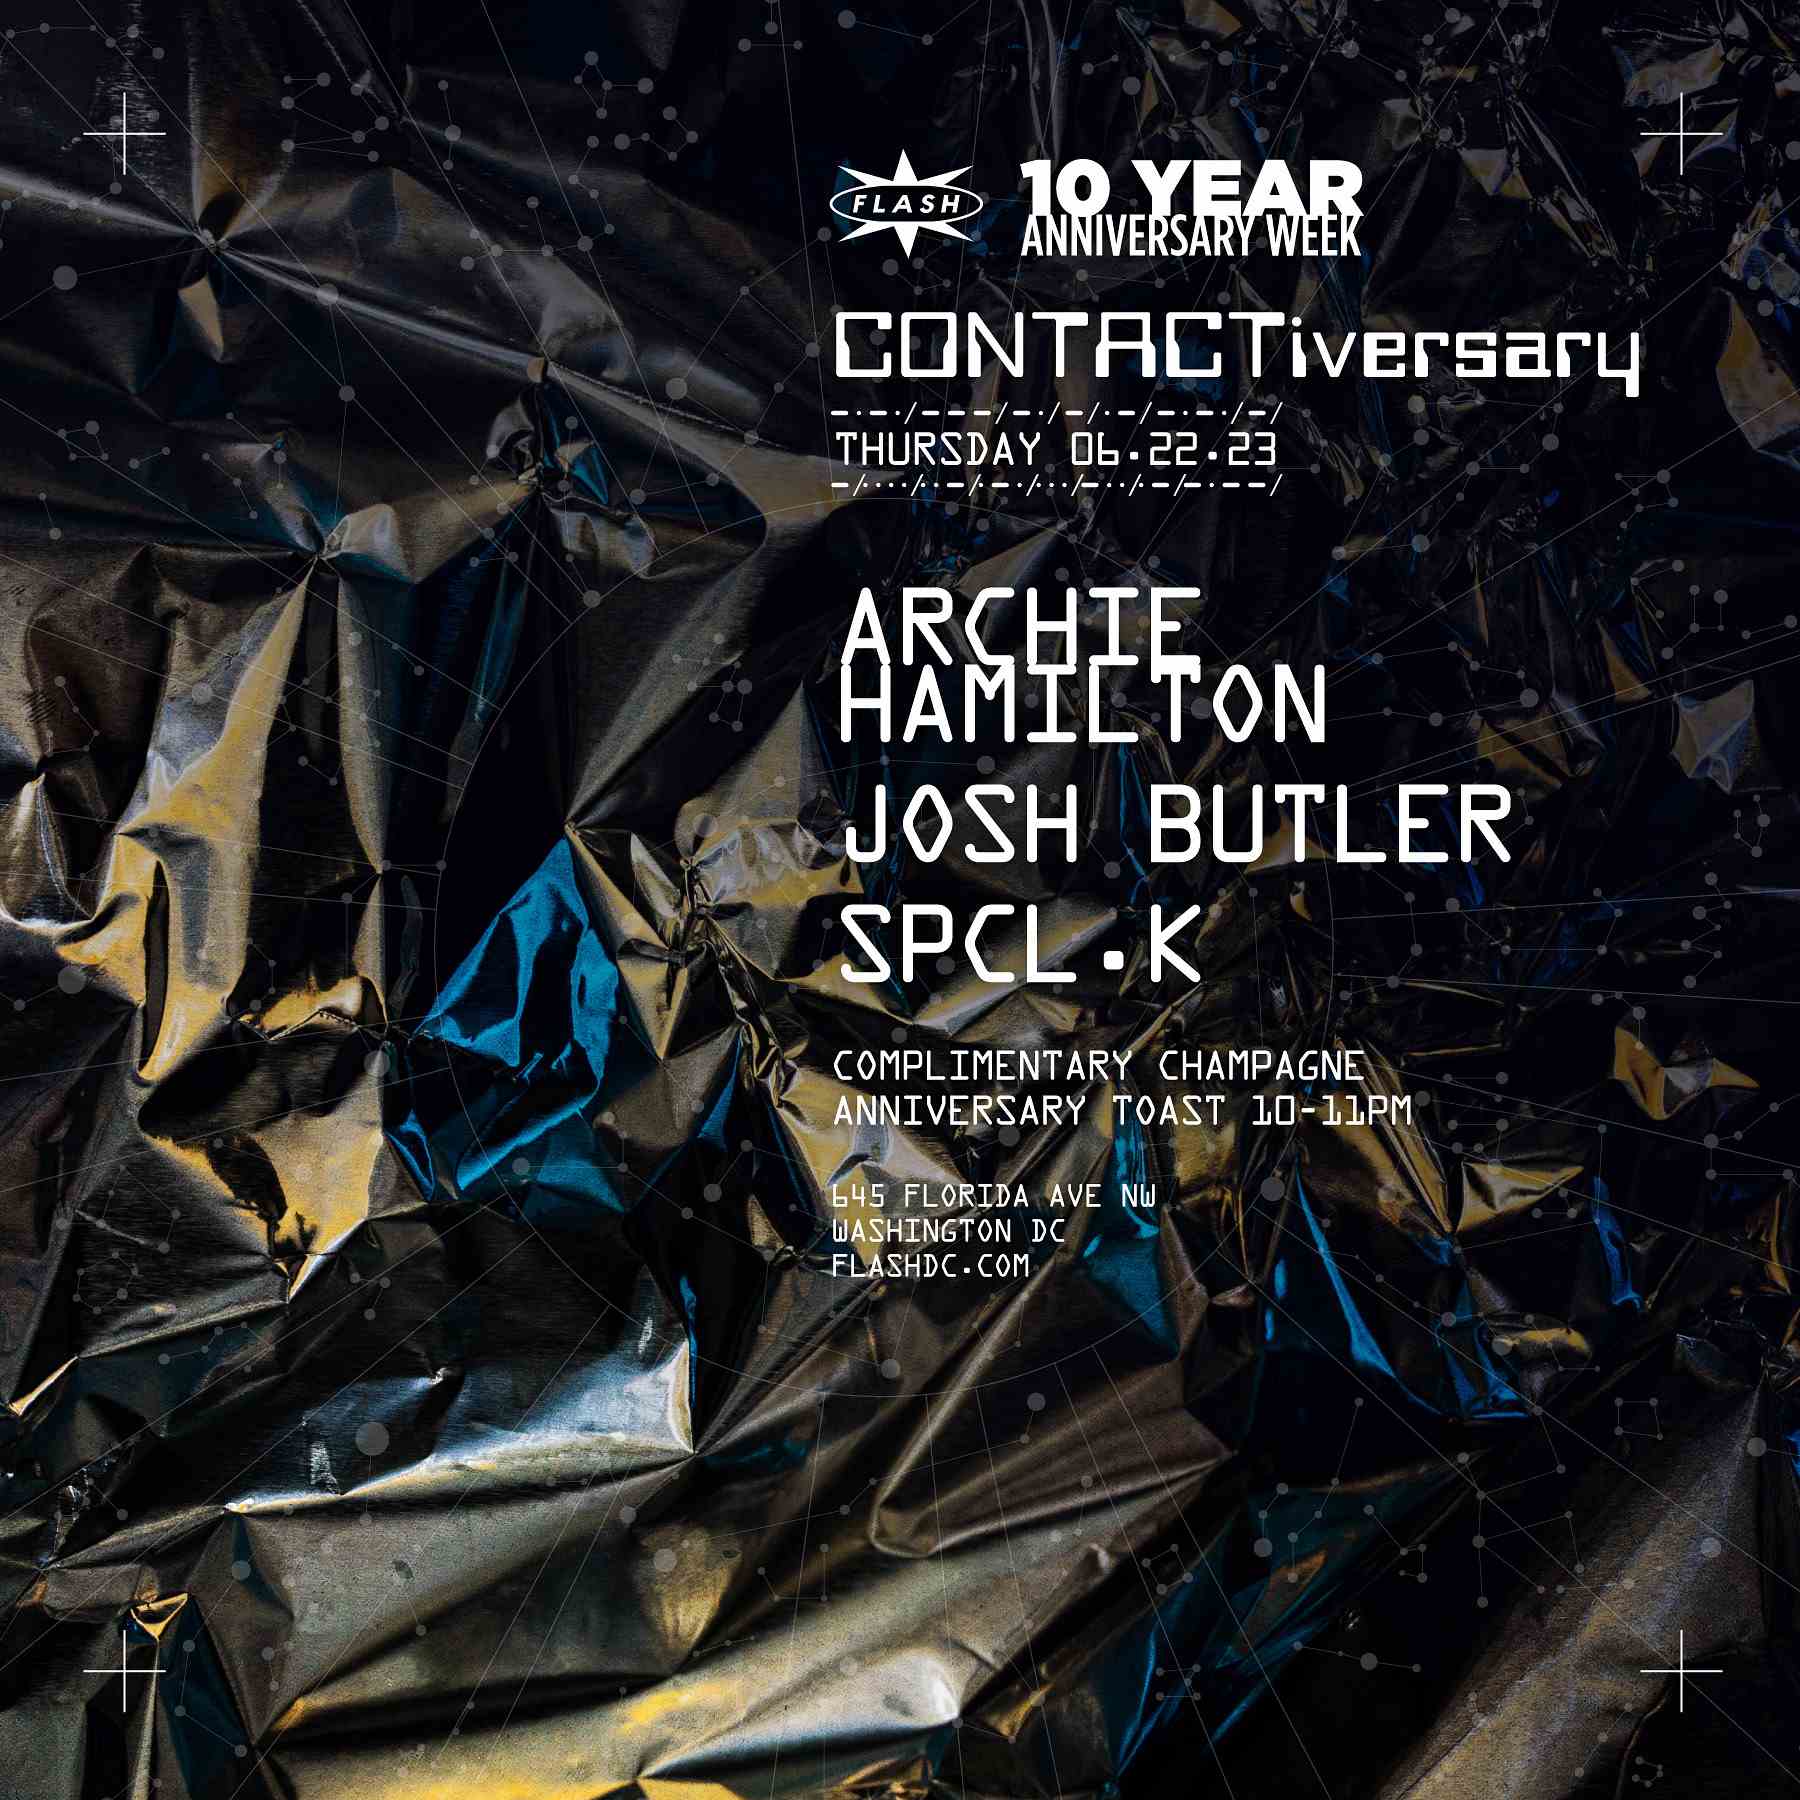 CONTACTiversary: Archie Hamilton - Josh Butler - SPCL. K event flyer